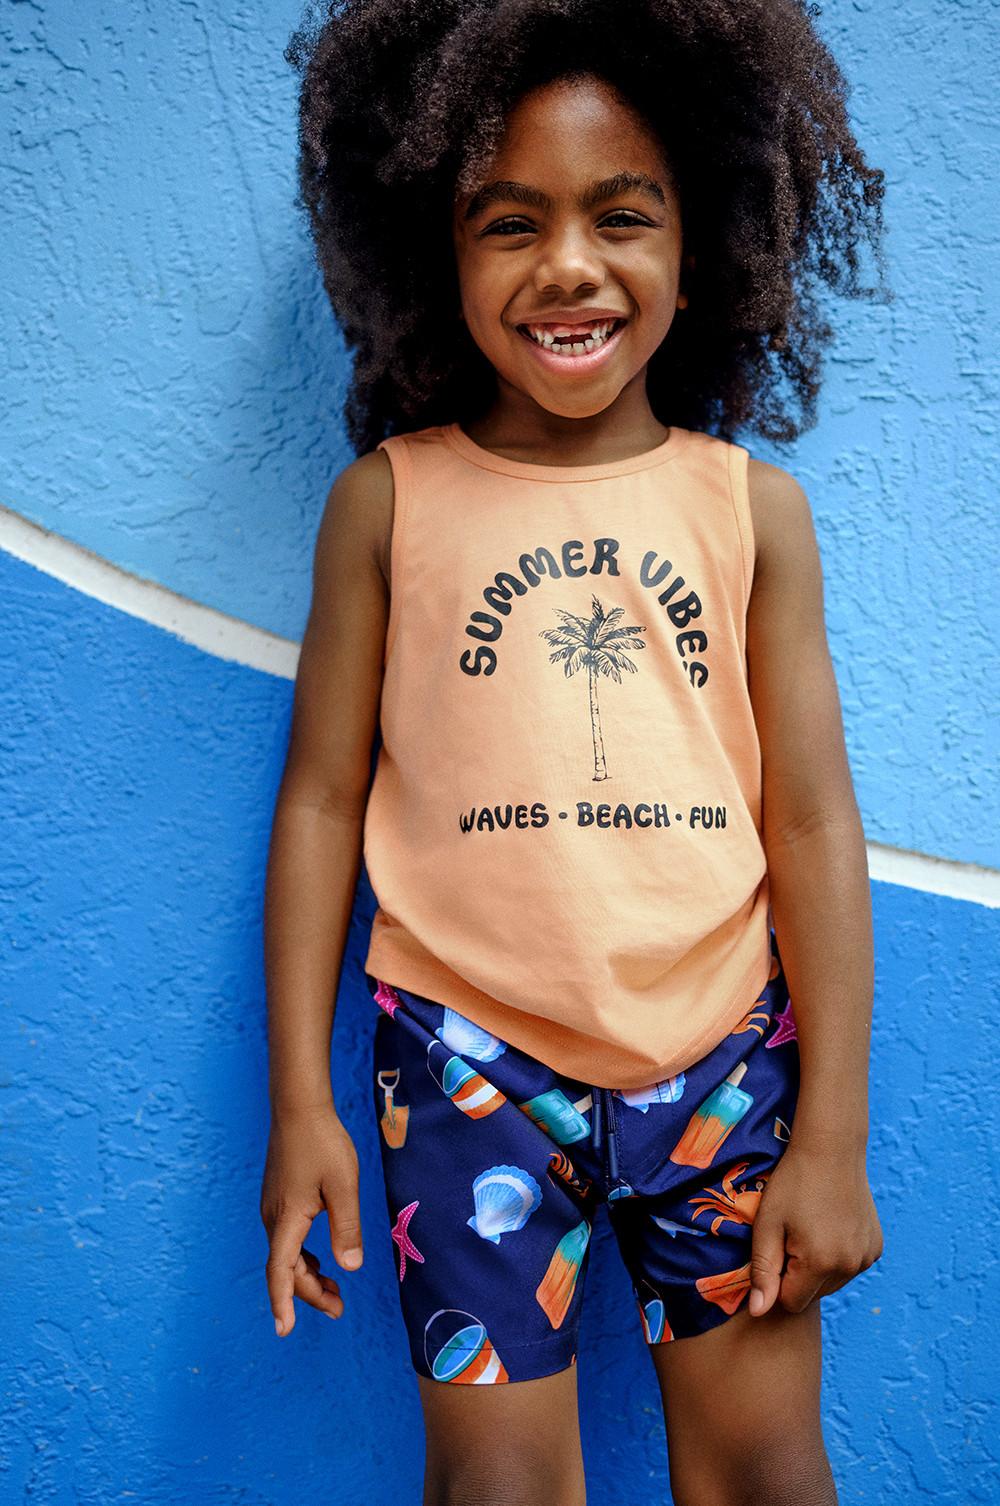 Child wearing patterned swim shorts and orange graphic tee